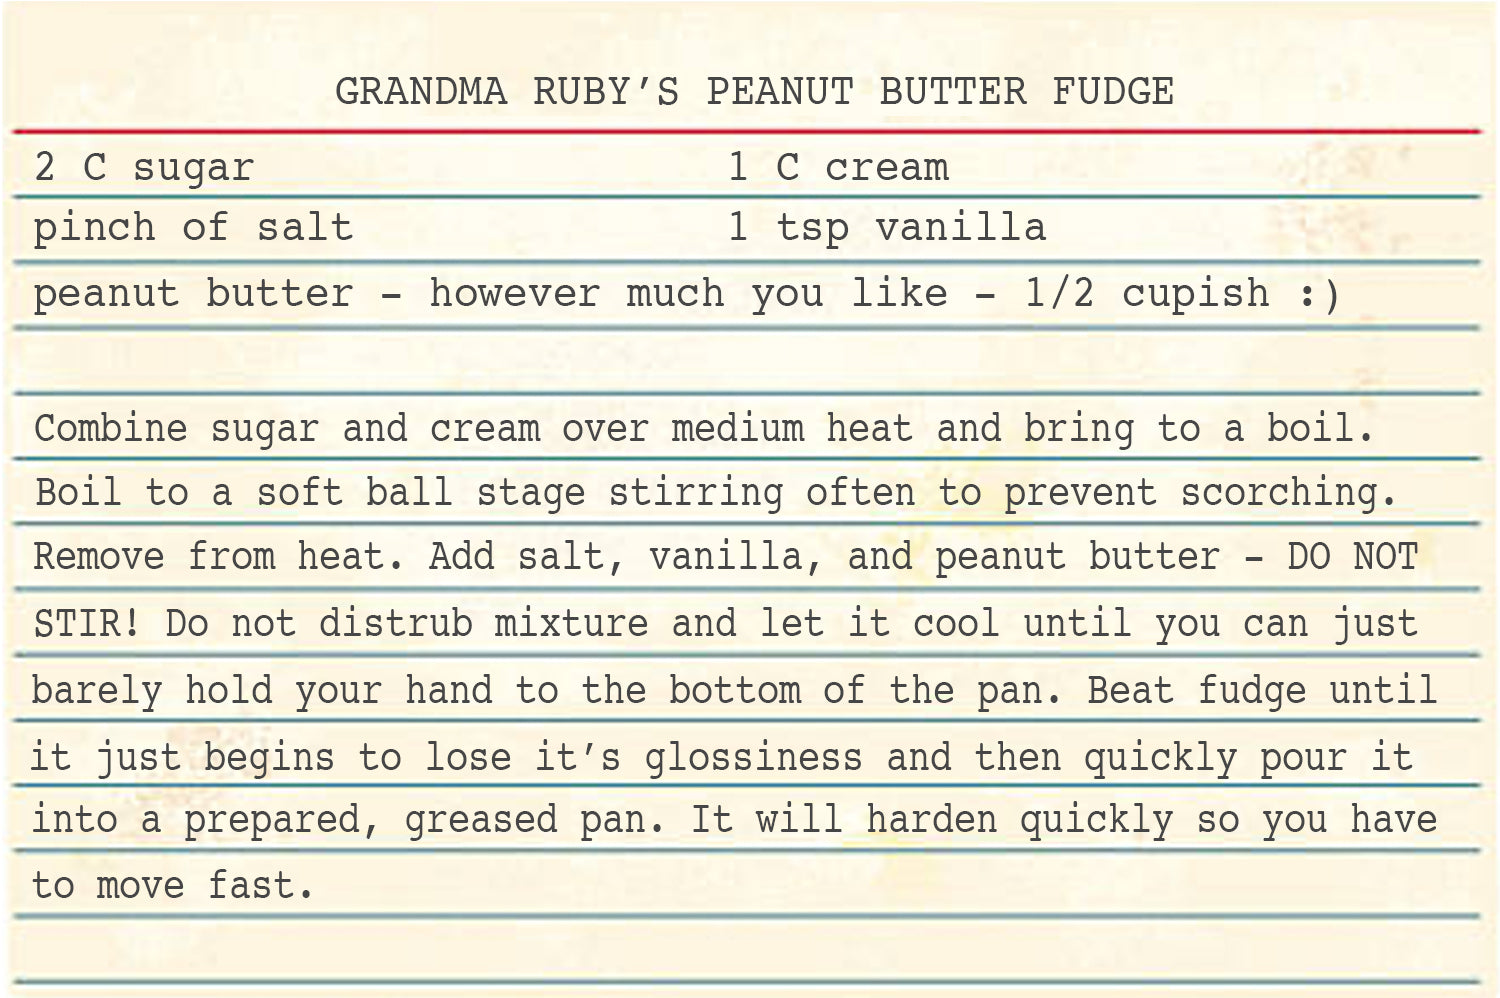 Grandma Ruby's Peanut Butter Fudge